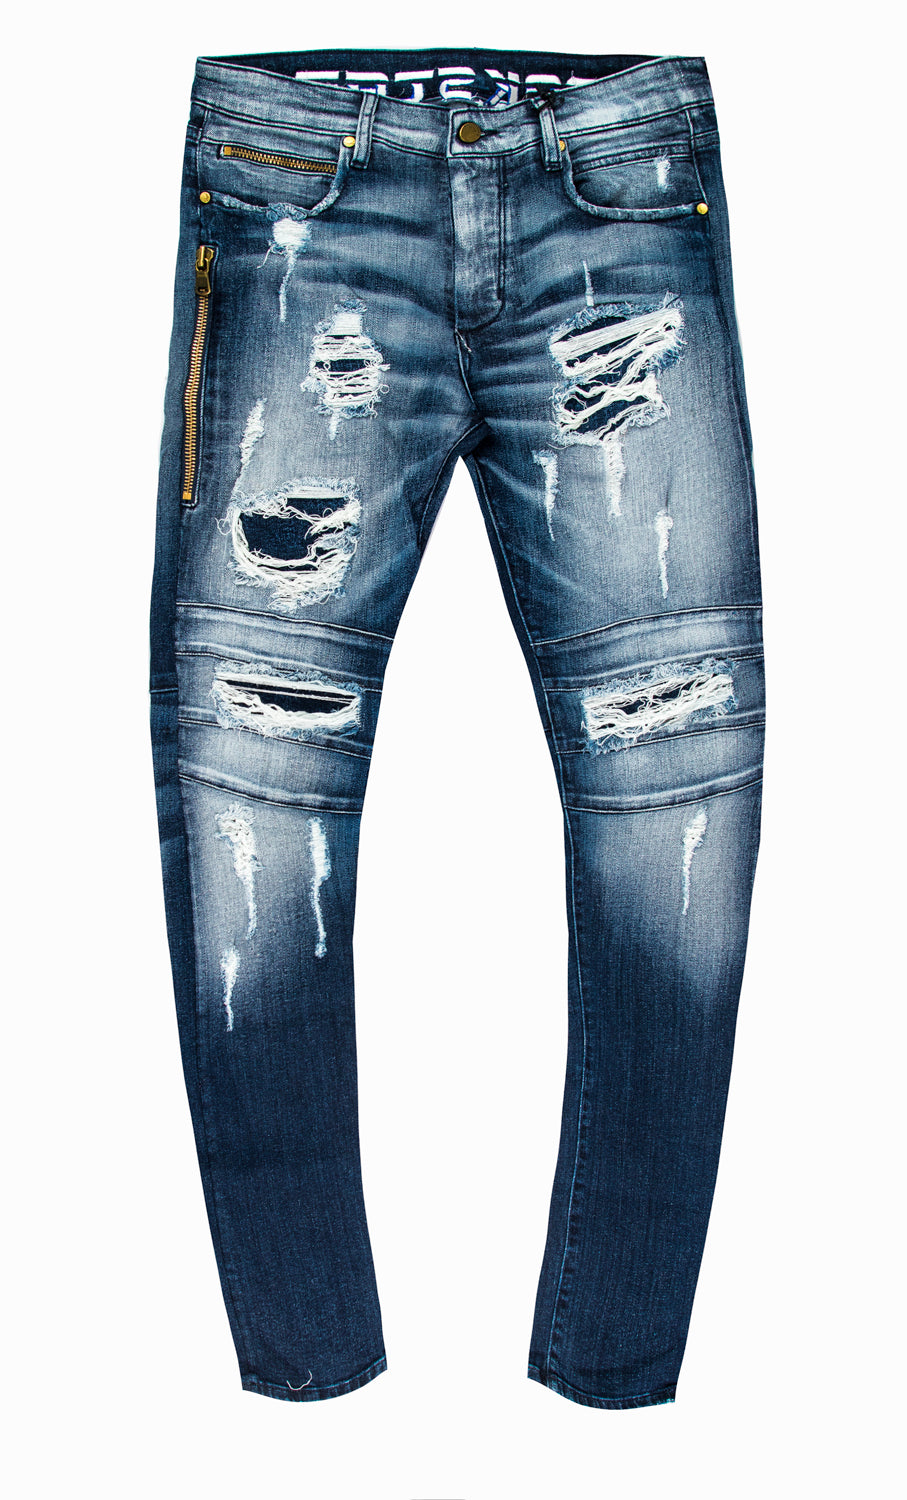 Keenan Biker Jeans (Blue) – Rockstar Original